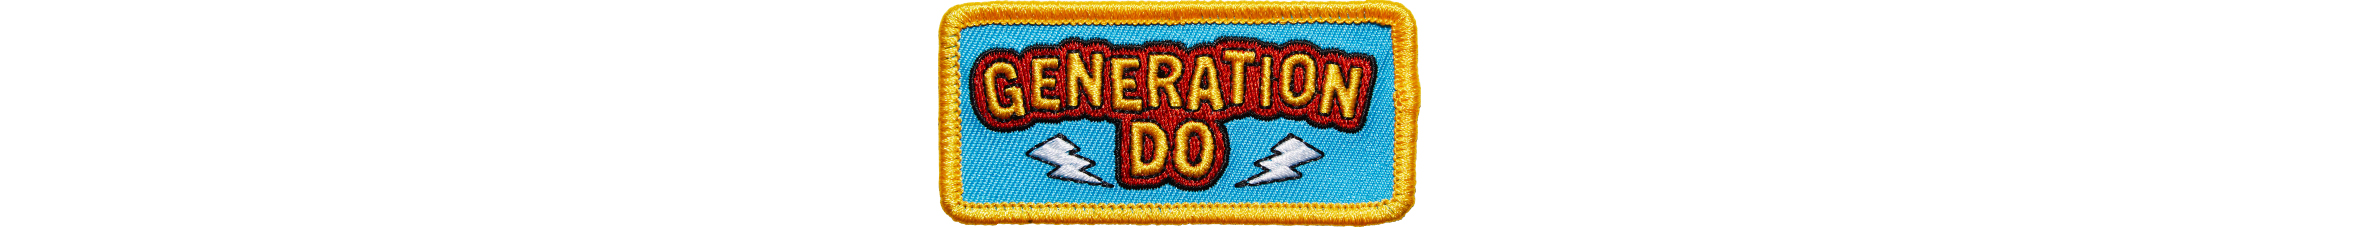 Generation Do Badge